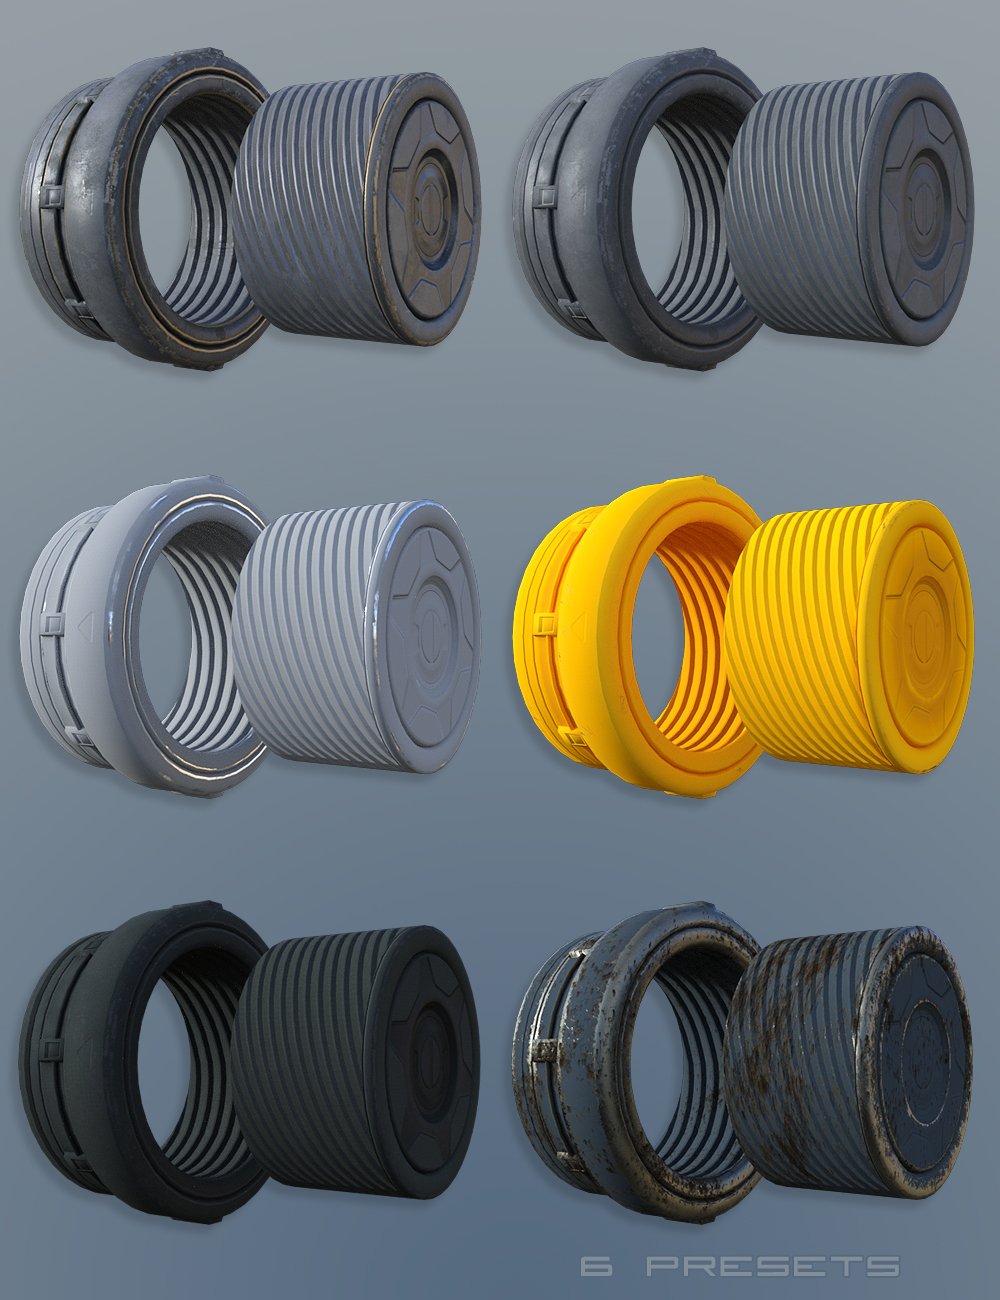 Flex Pipes by: The AntFarm, 3D Models by Daz 3D